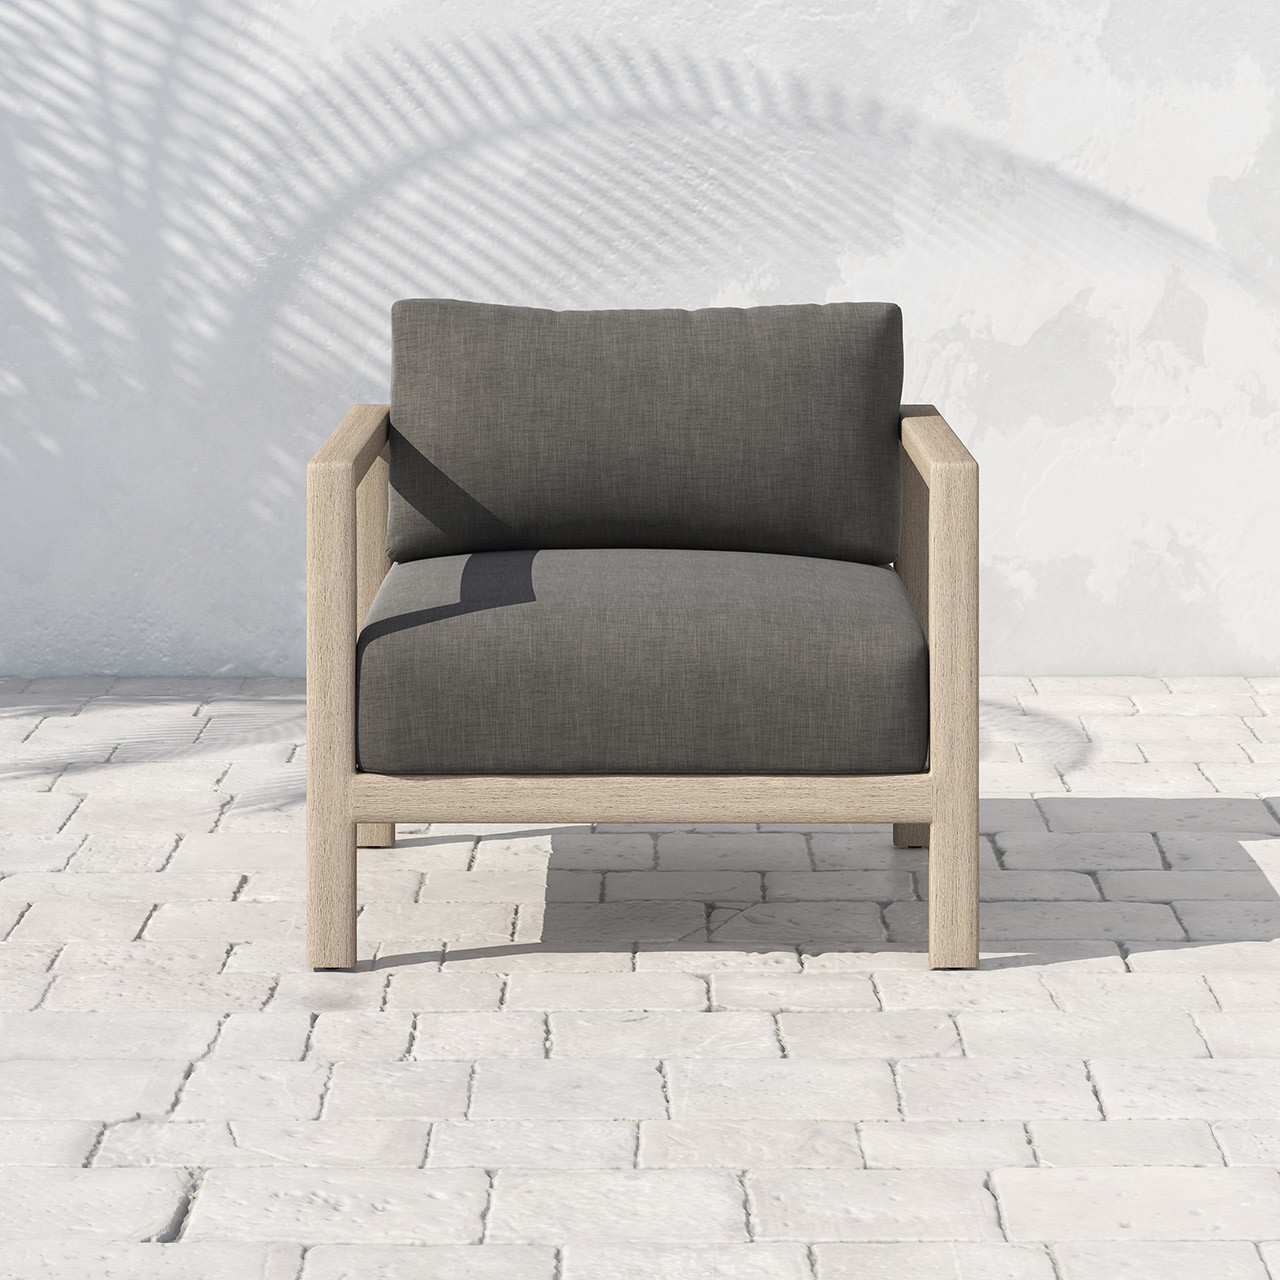 Oceanside Outdoor Teak Lounge Chair - Washed Brown